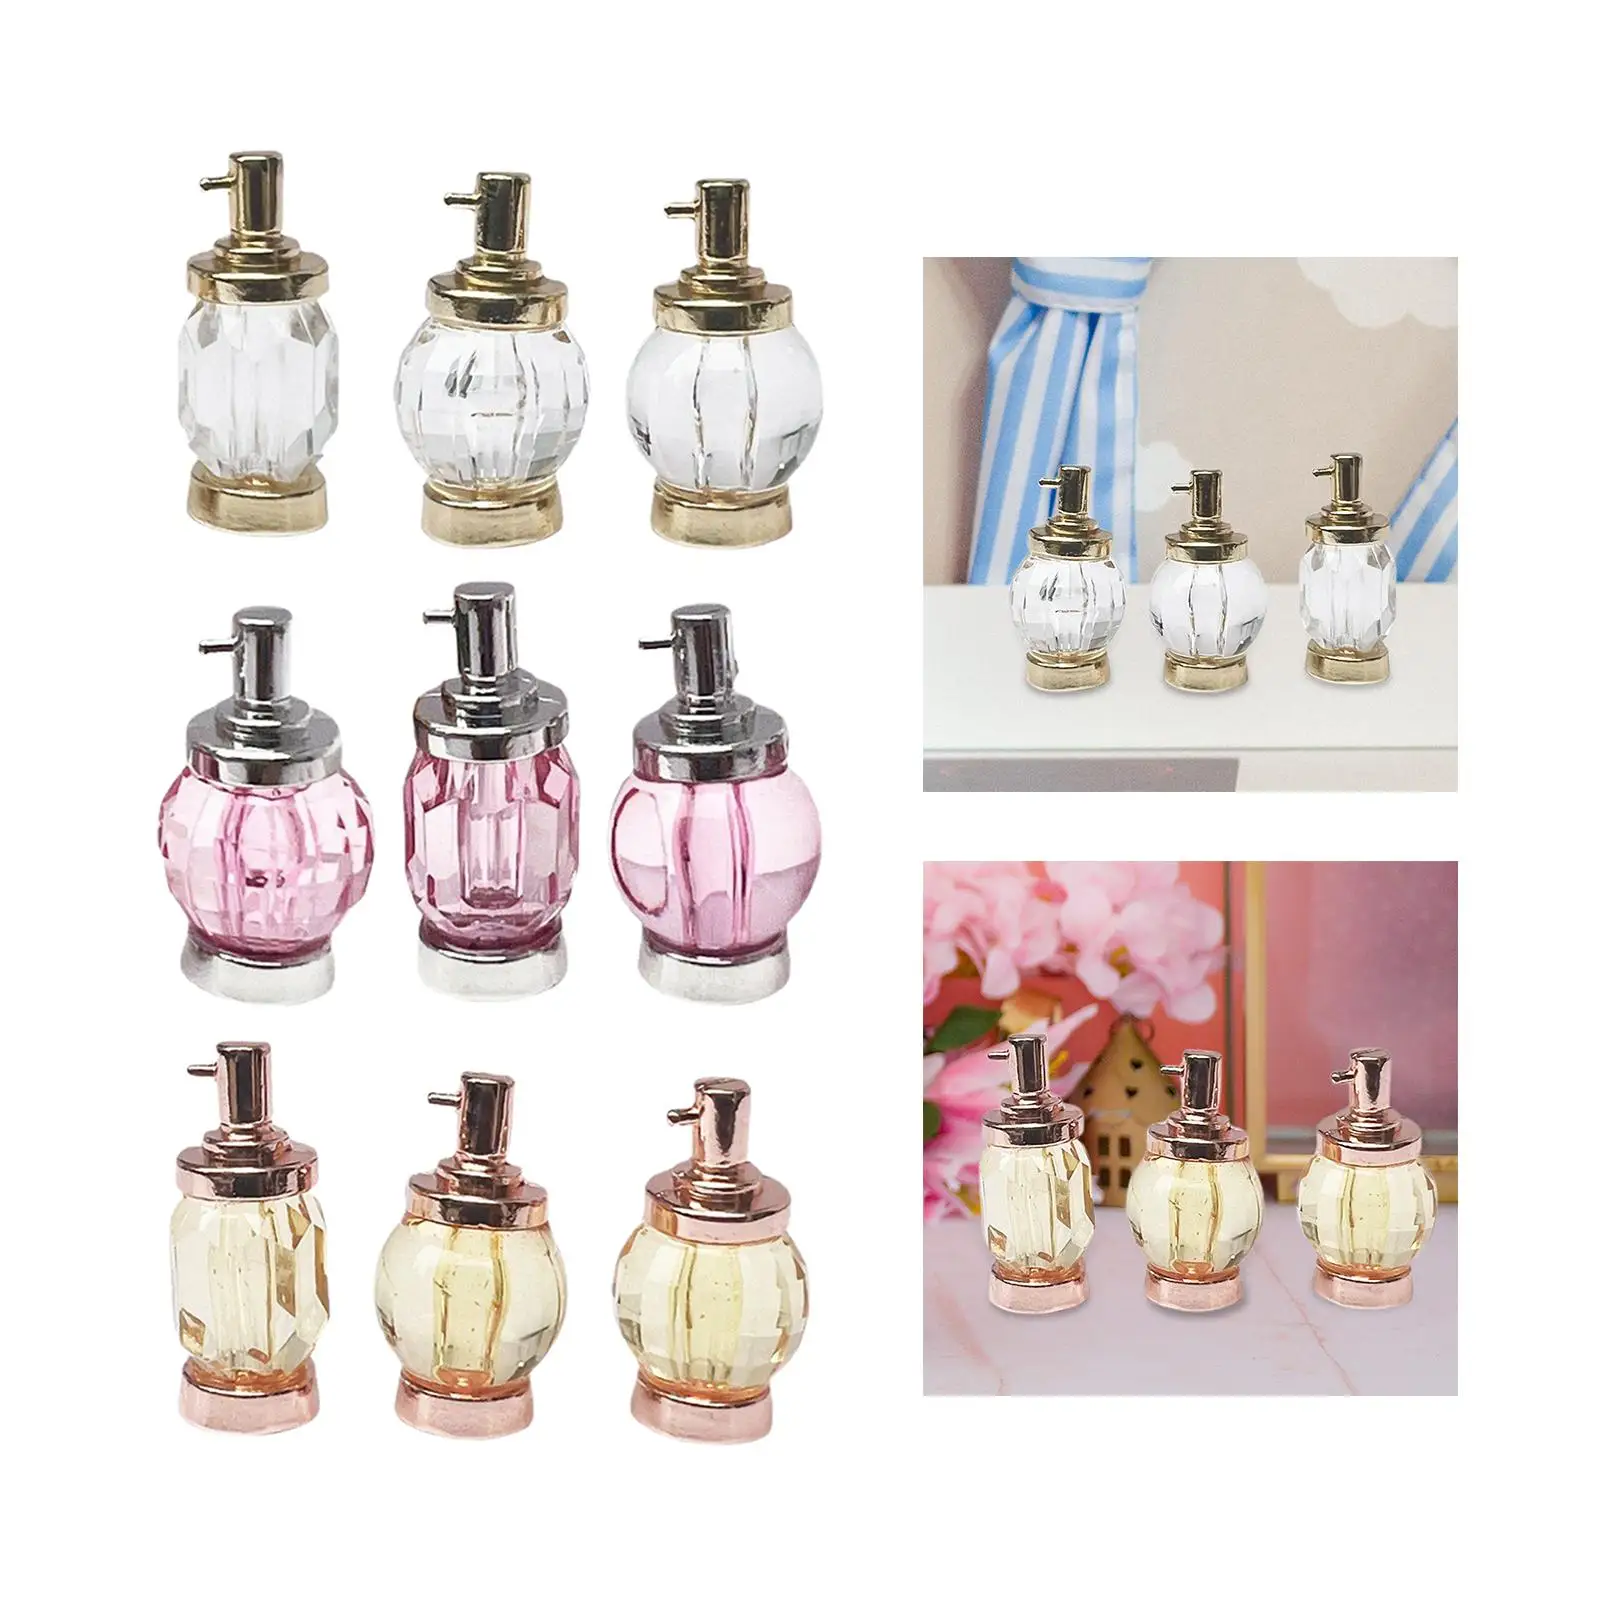 9x Modern Mini 1:12 Scale Doll House Perfume Bottle Model Living Room Scenery Ornaments